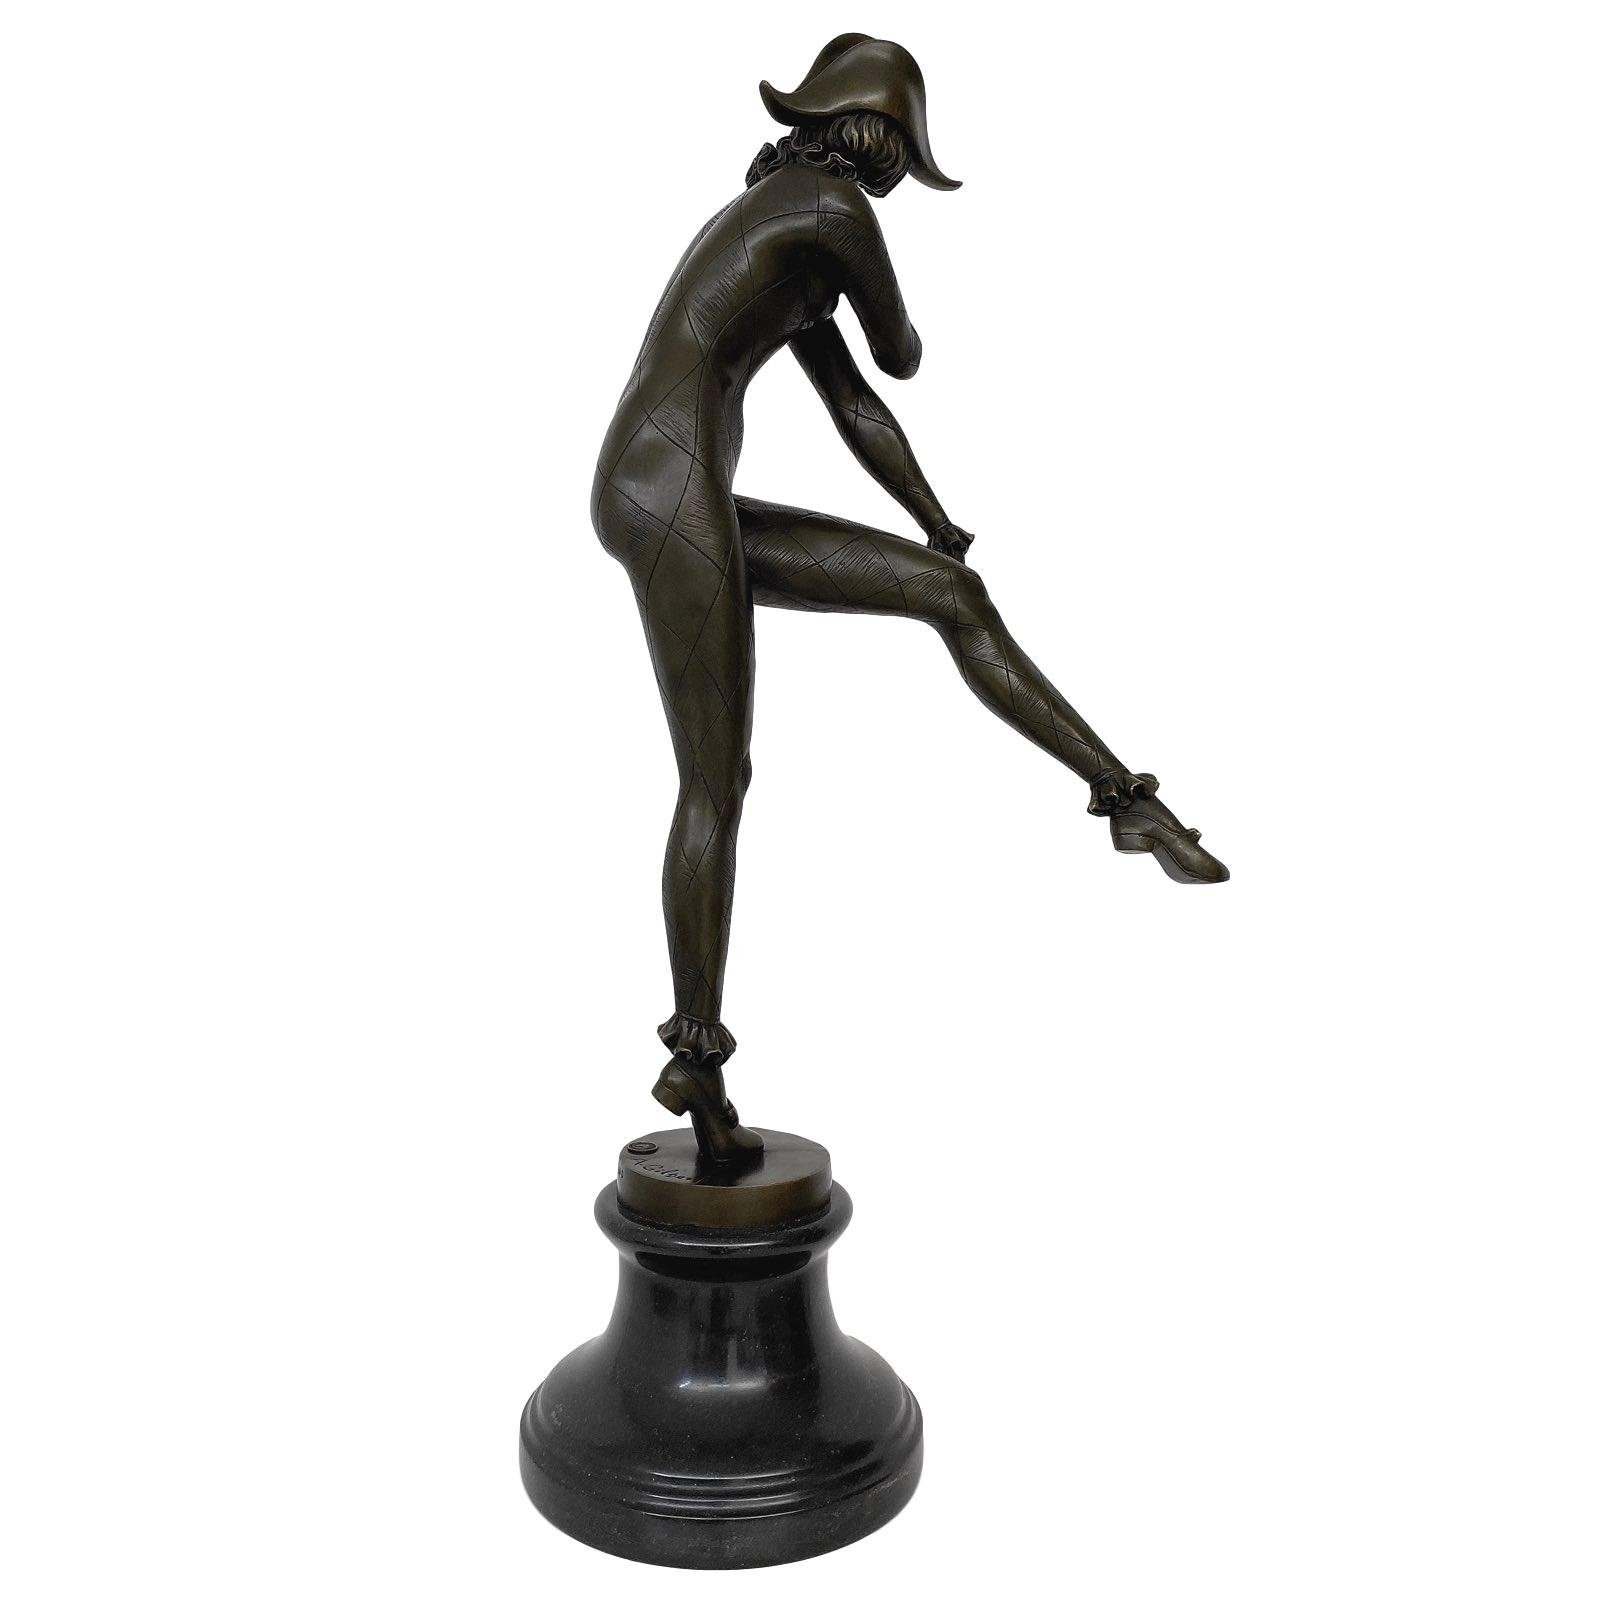 Aubaho Skulptur Bronzeskulptur Harlekin Frau Bronze 72cm Rep Gilbert nach Figur Alfred